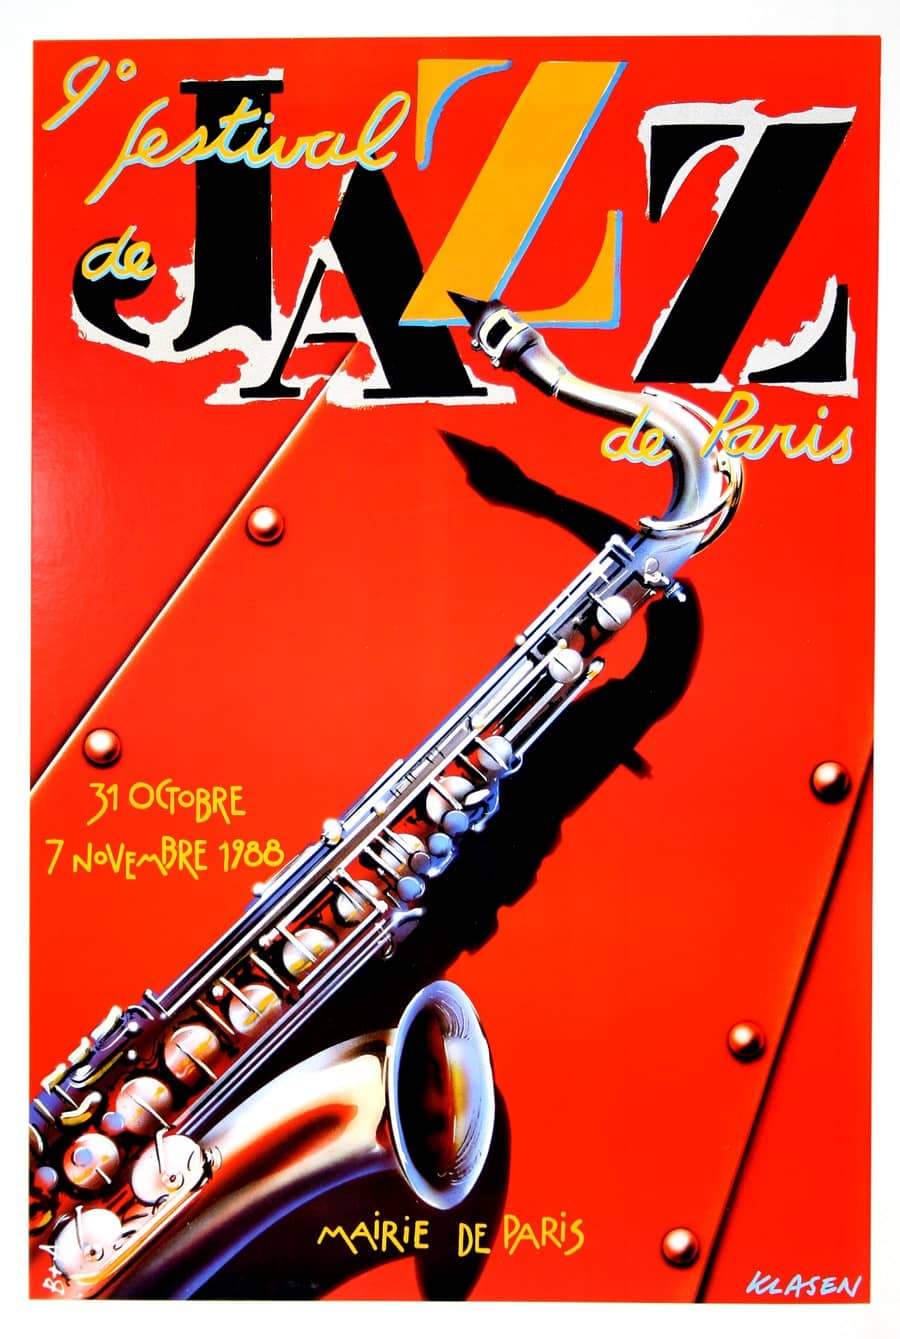 Jazz Festival of Paris Poster 1988 by Klasen